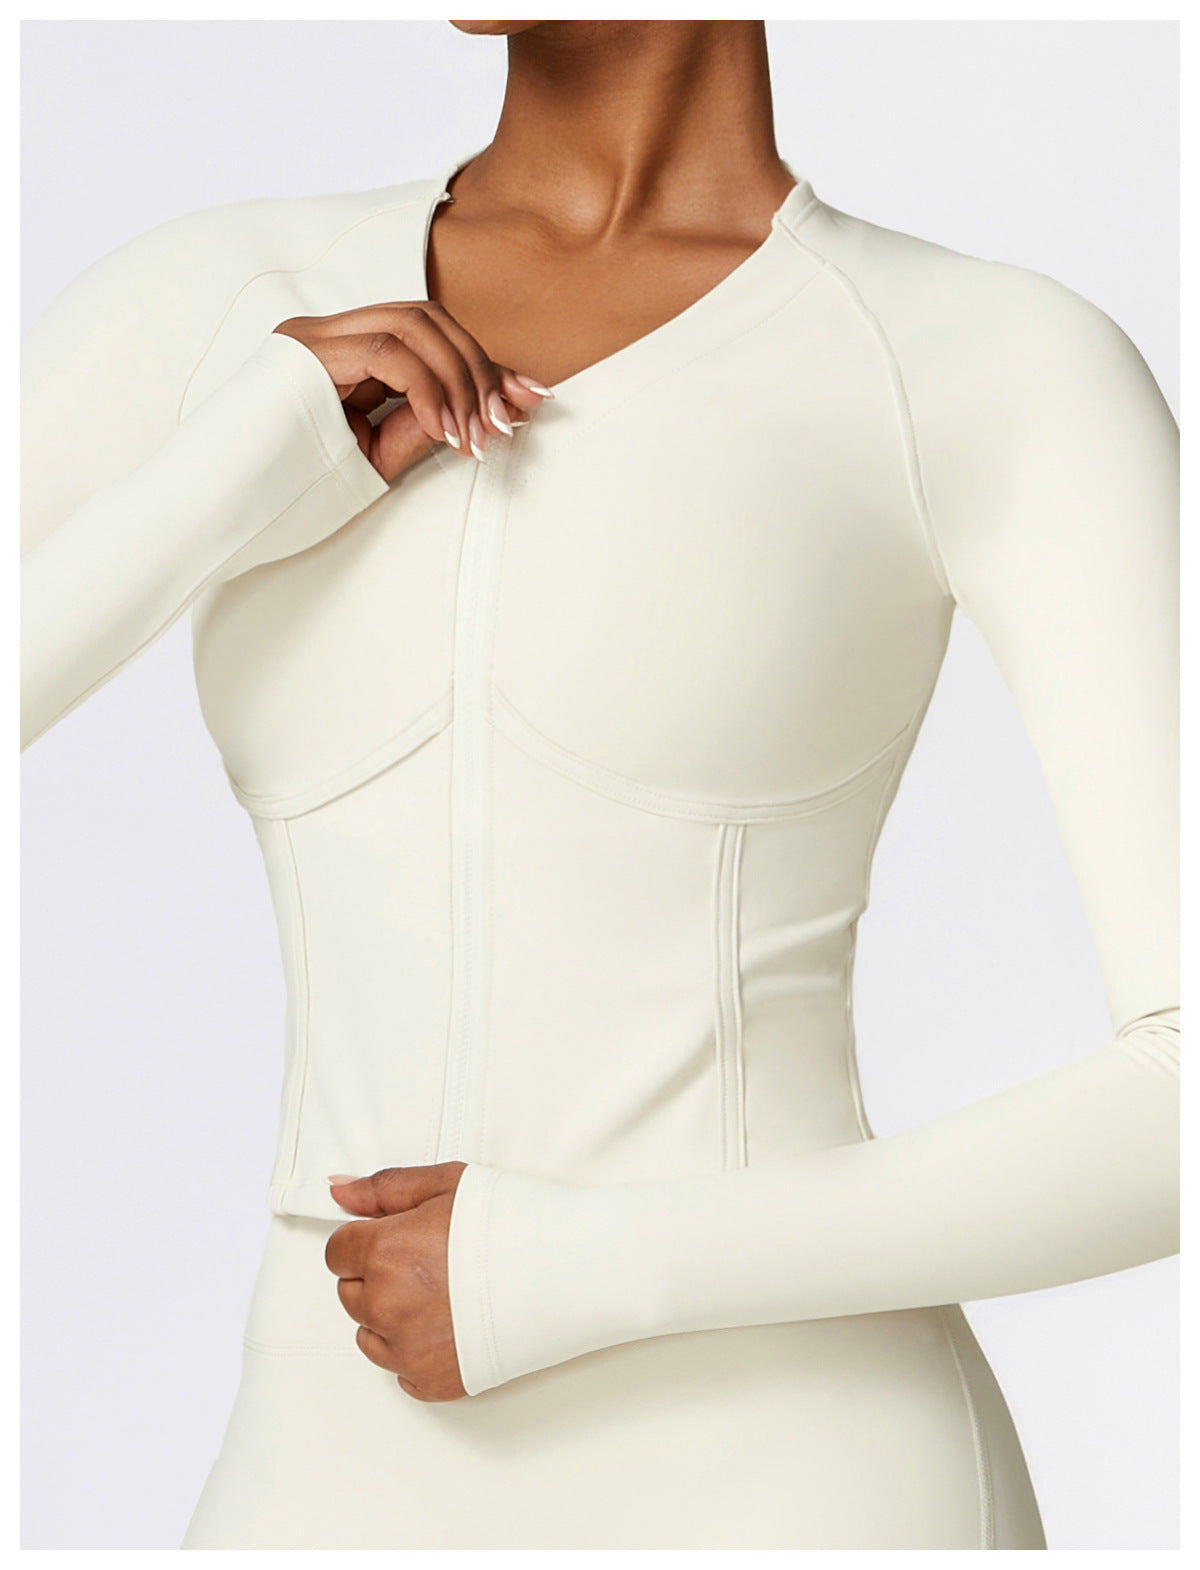 
                  
                    Winter Warm Fleece Lined Long Sleeved Yoga Jacket Outdoor Running Fitness Top Tight Sports Jacket
                  
                